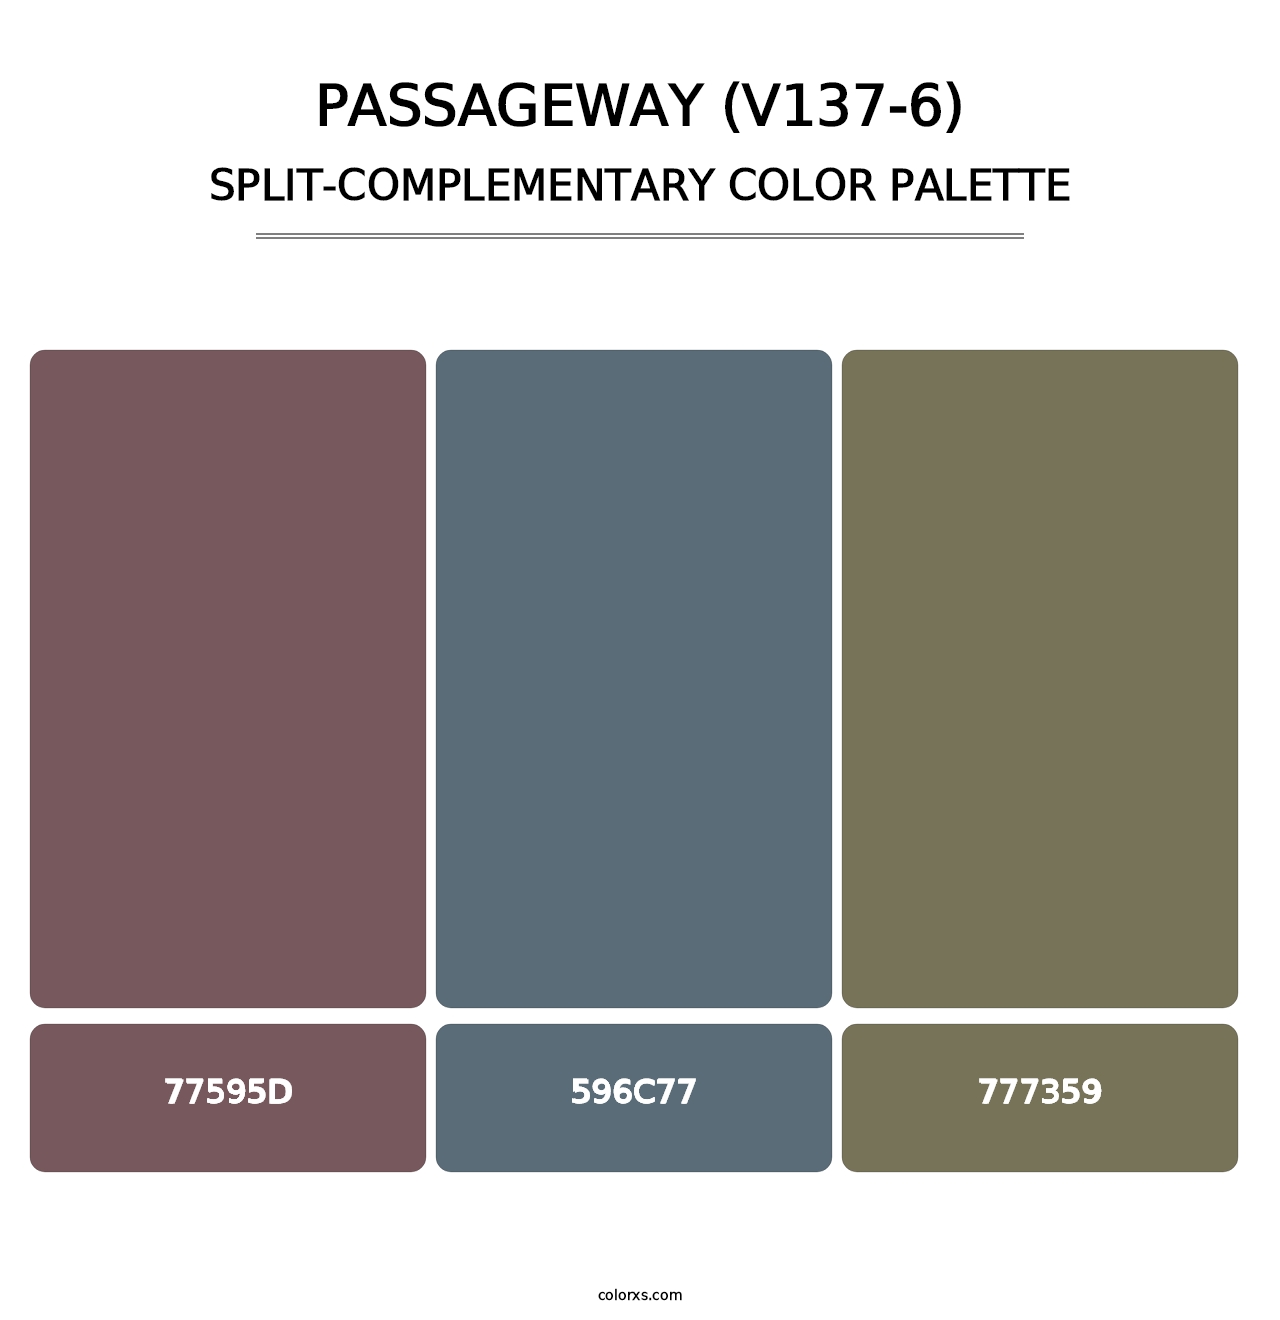 Passageway (V137-6) - Split-Complementary Color Palette